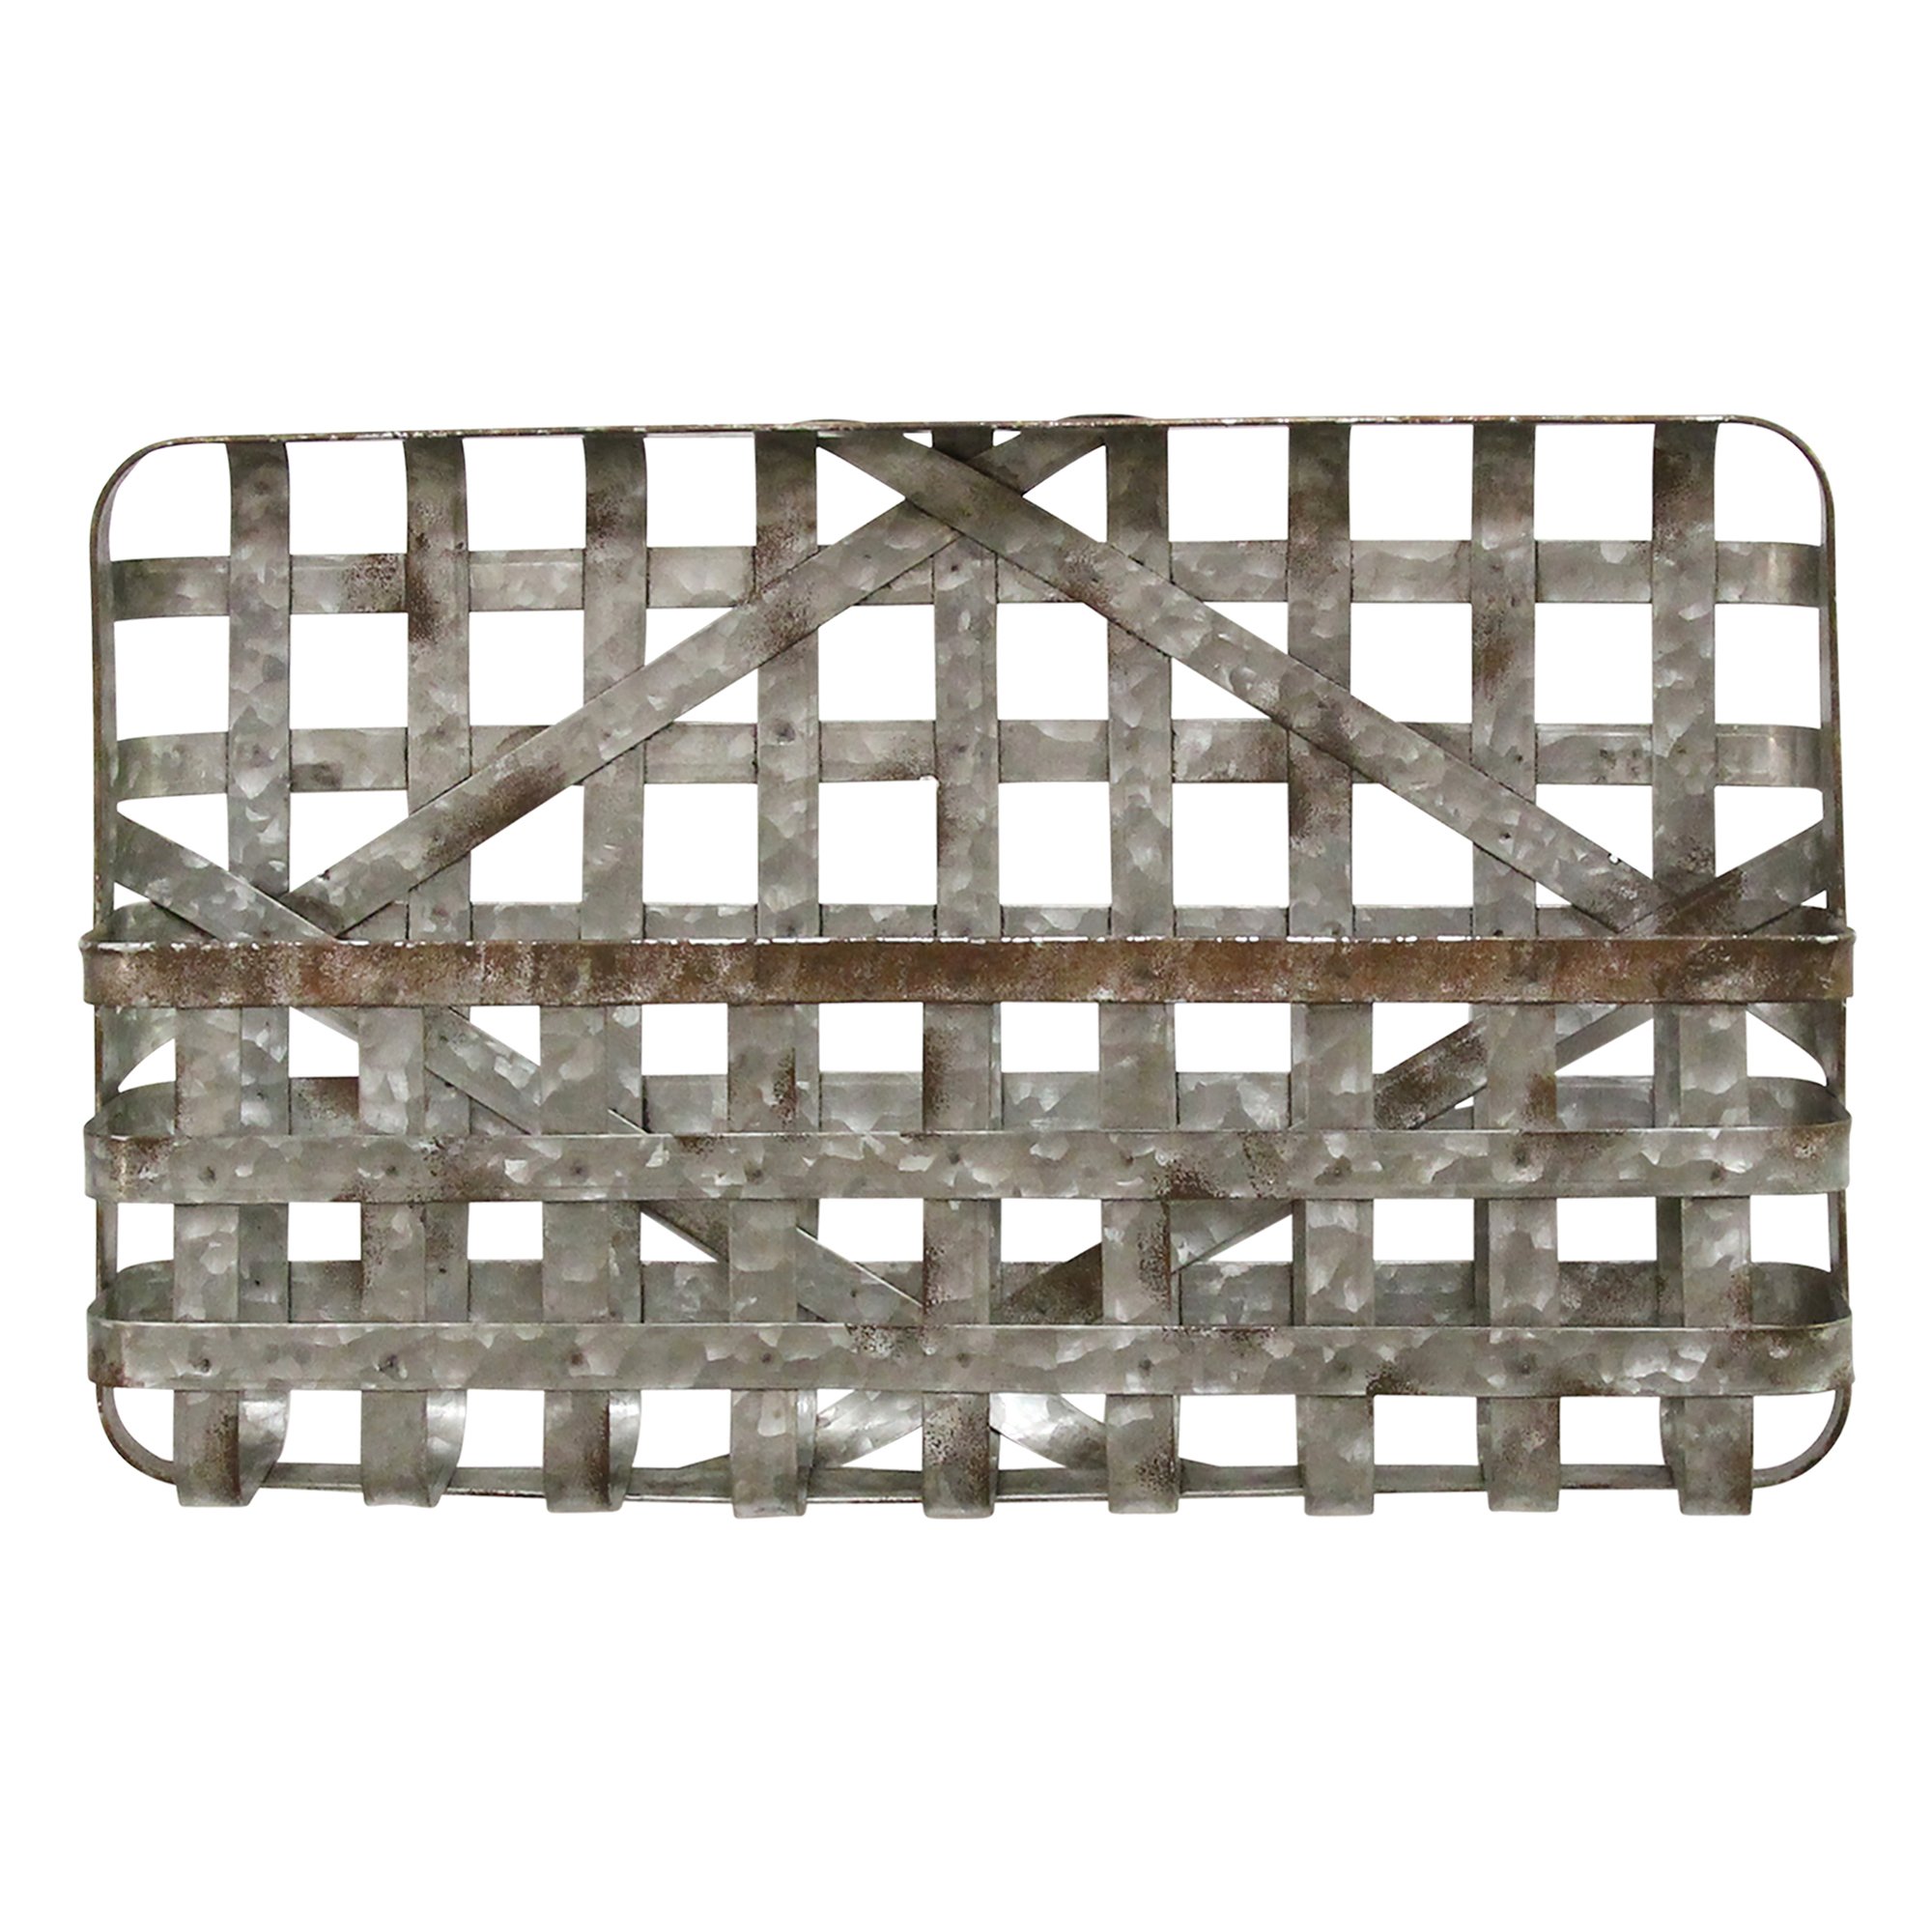 Galvanized Basket Weave Wall Basket